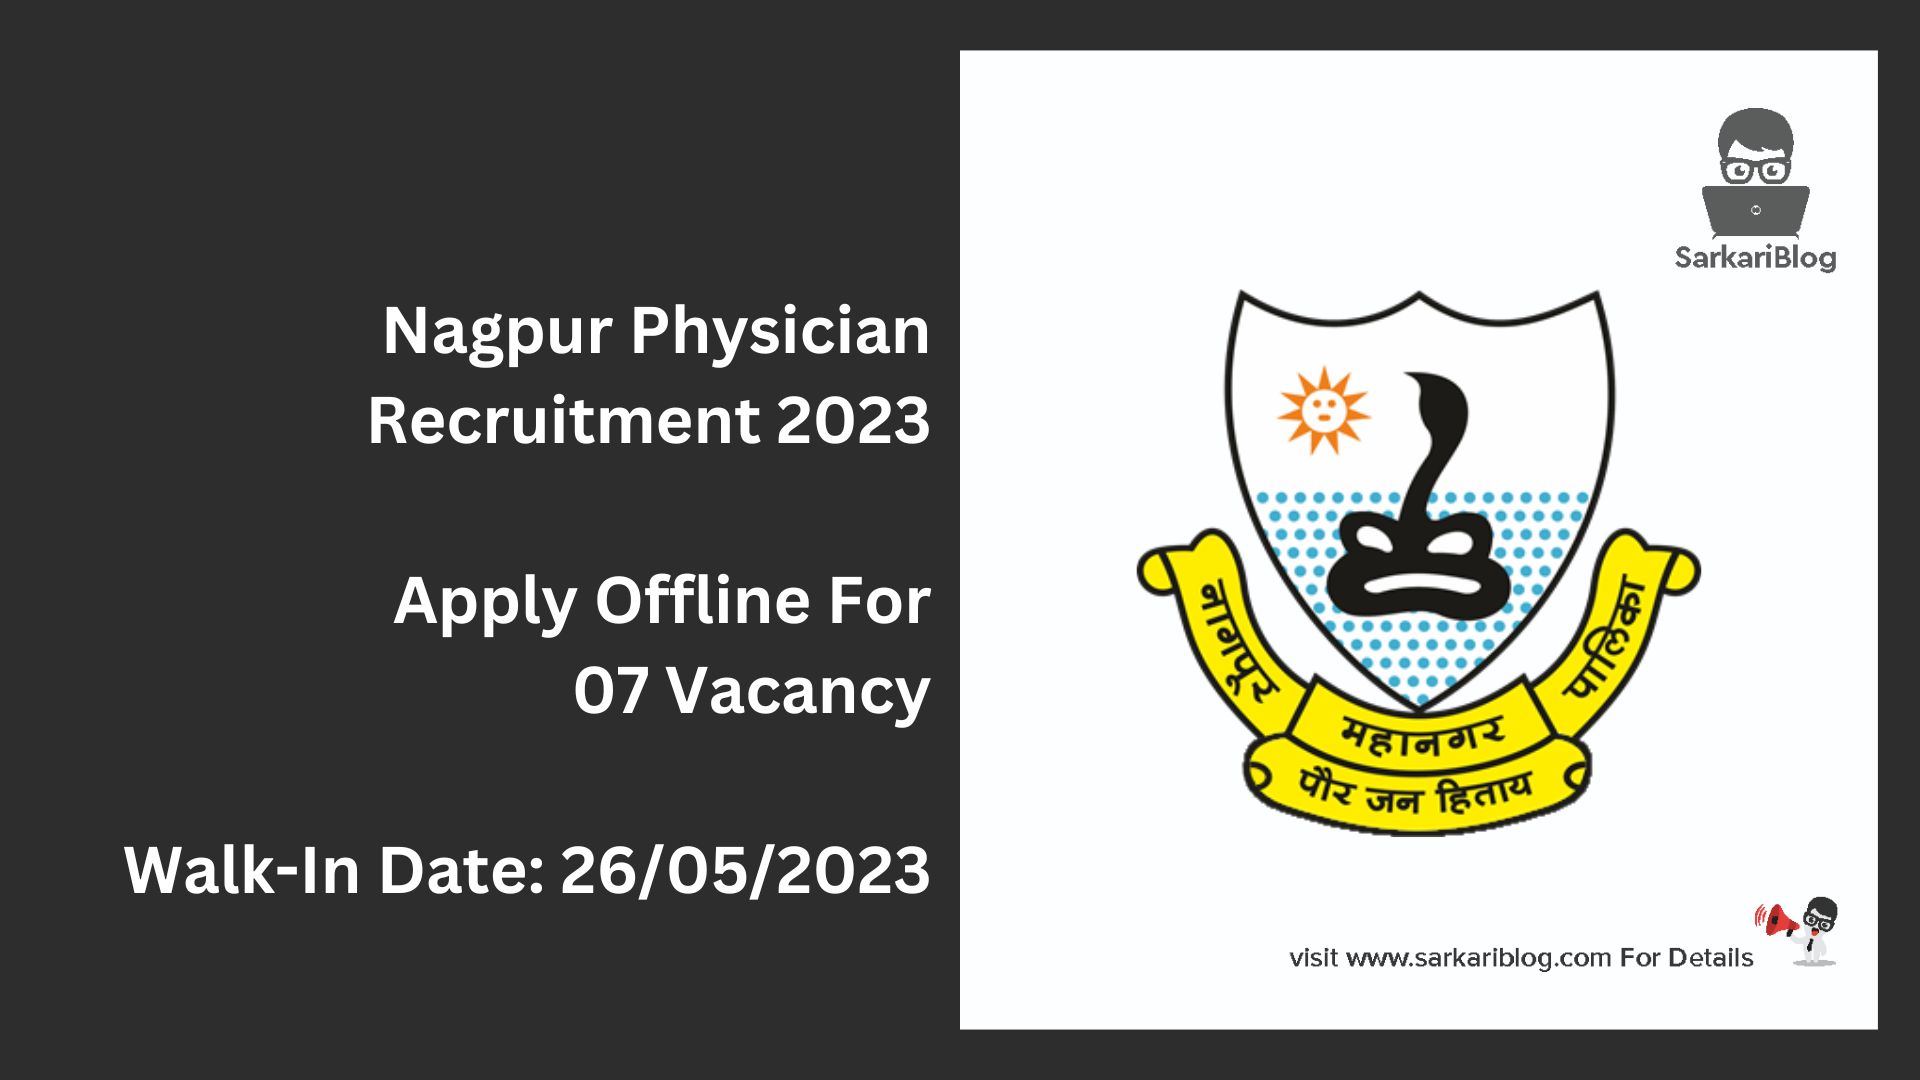 Nagpur Physician Recruitment 2023